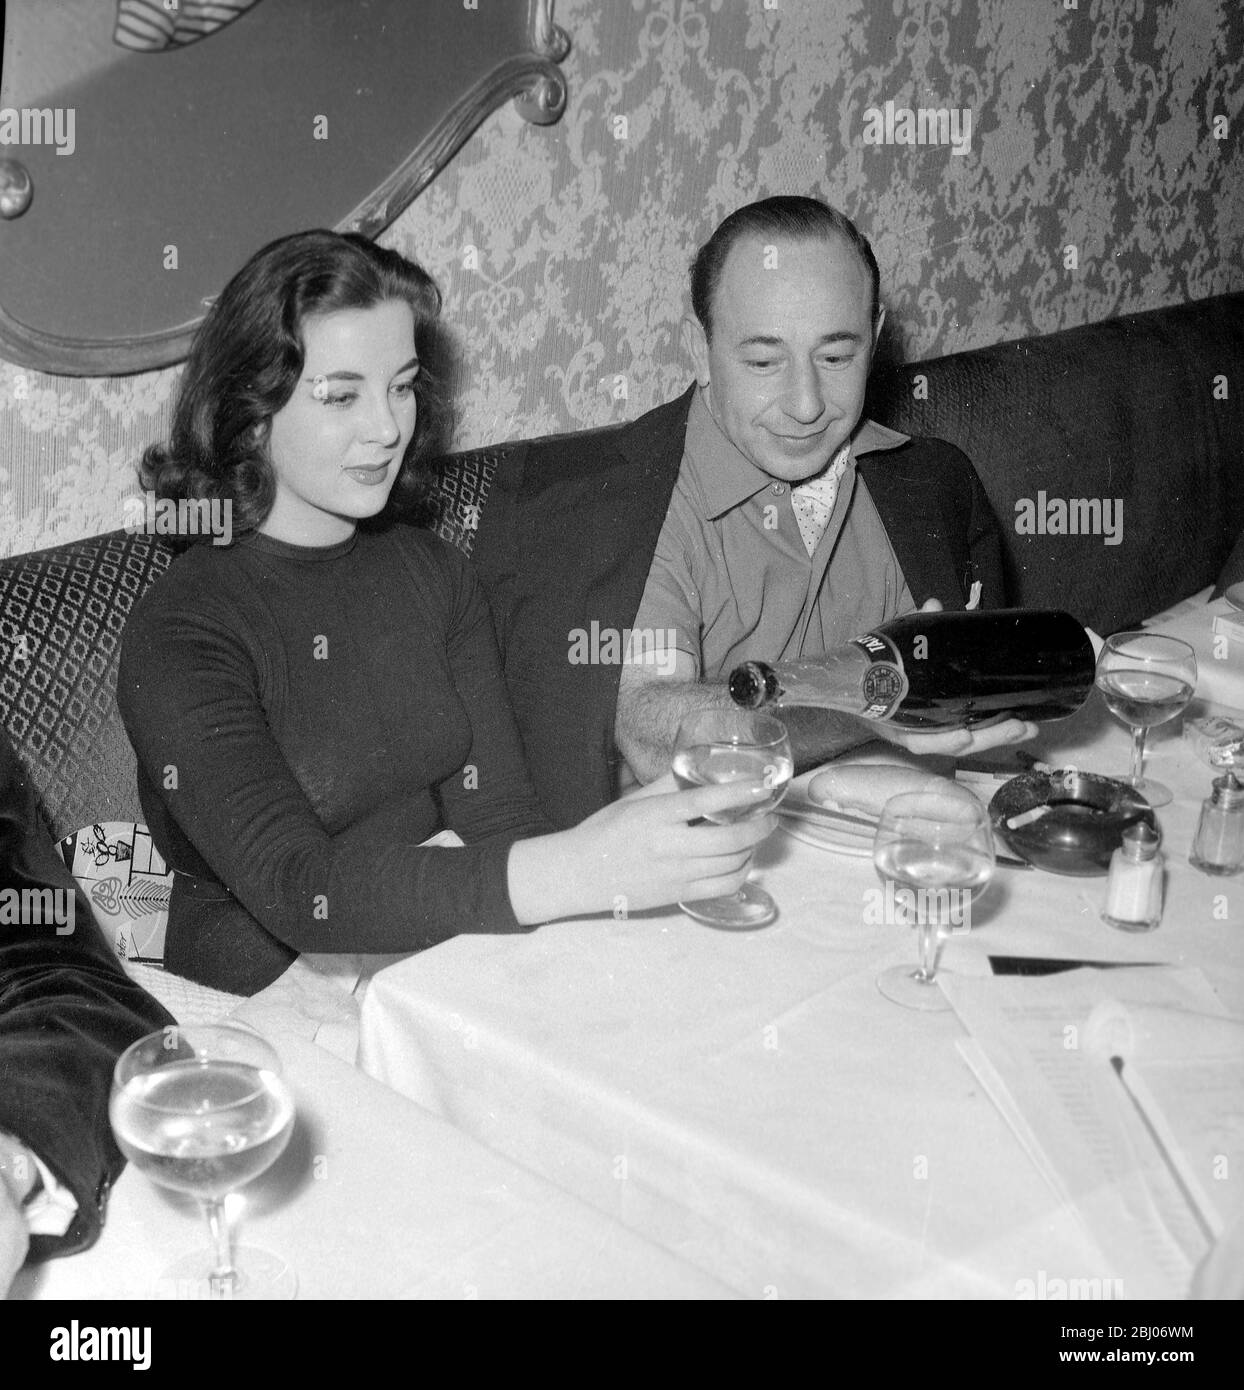 Ed Stern and Actress Barbara Joyce at last nights Latin Quarter Party - February 1958 Stock Photo